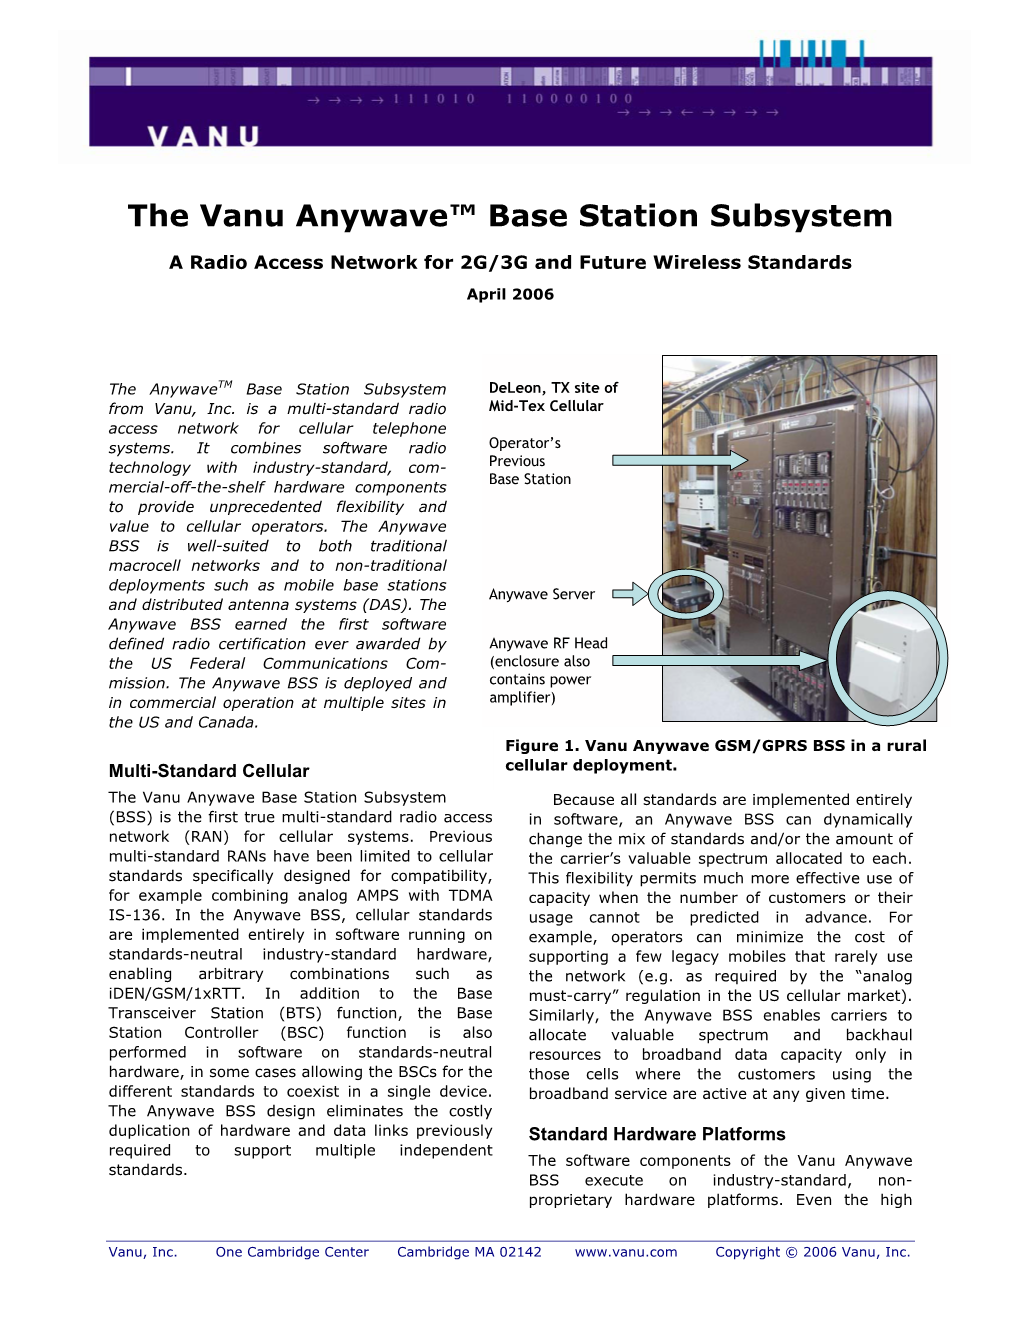 The Vanu Anywave™ Base Station Subsystem